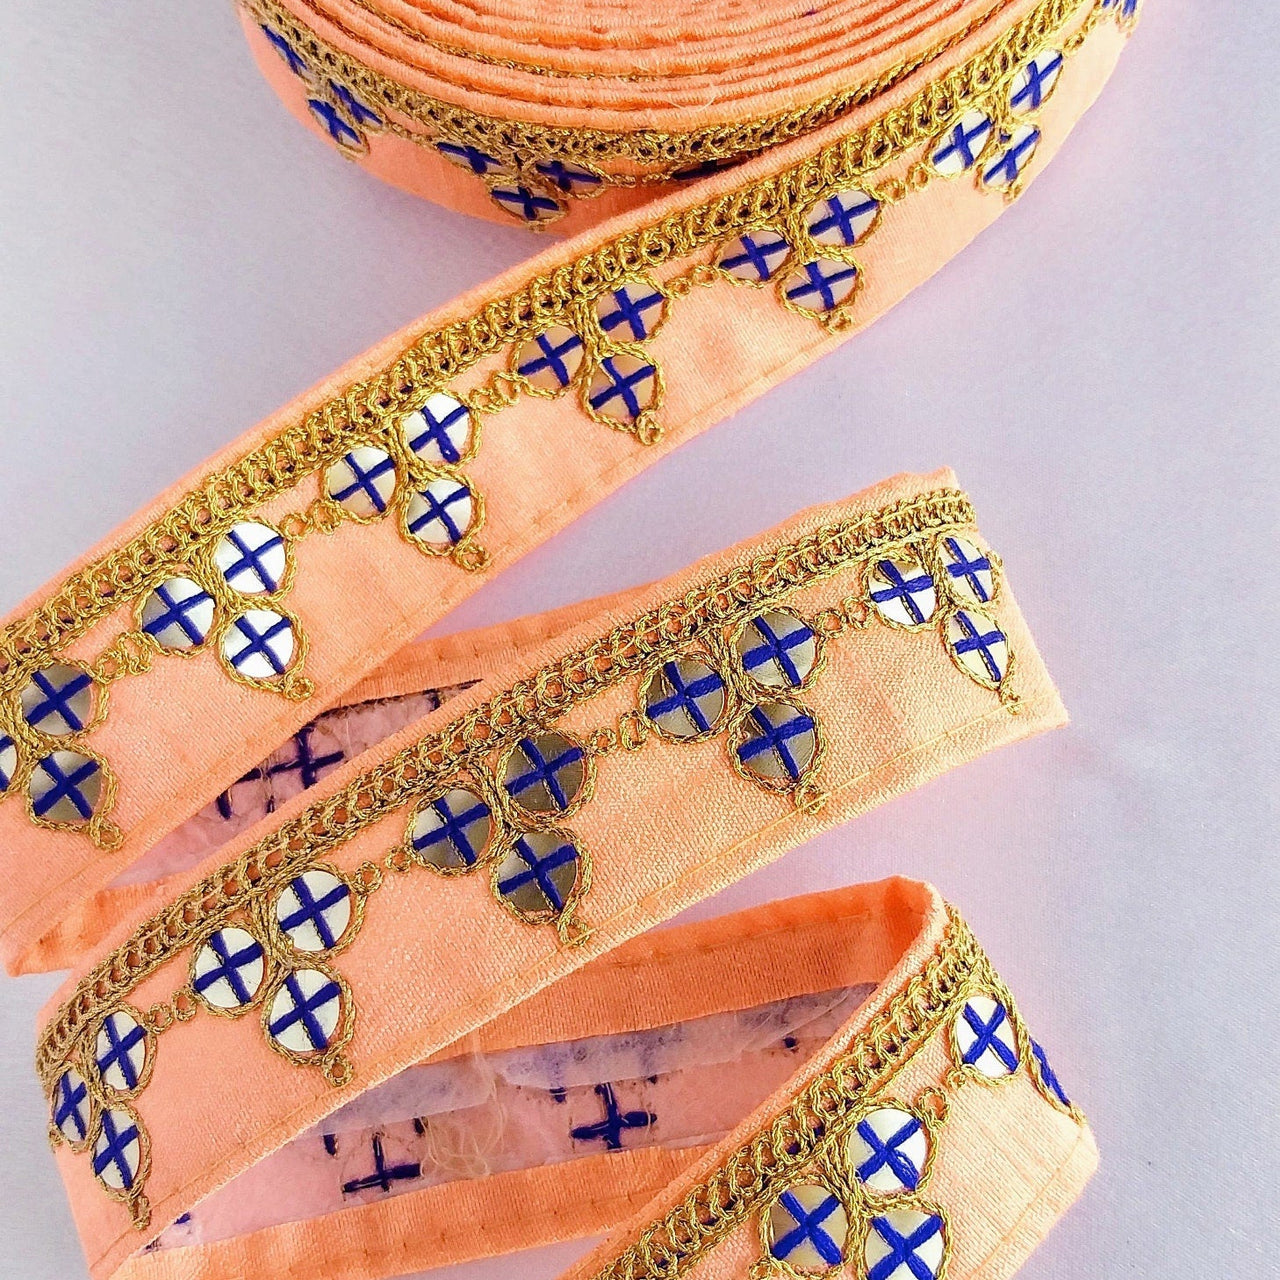 Mirrored Yellow/ Mint Green/ Cyan Blue/ Melon Orange Fabric Trim With Gold Embroidery, Indian Sari border - 210119L291/92/93/94